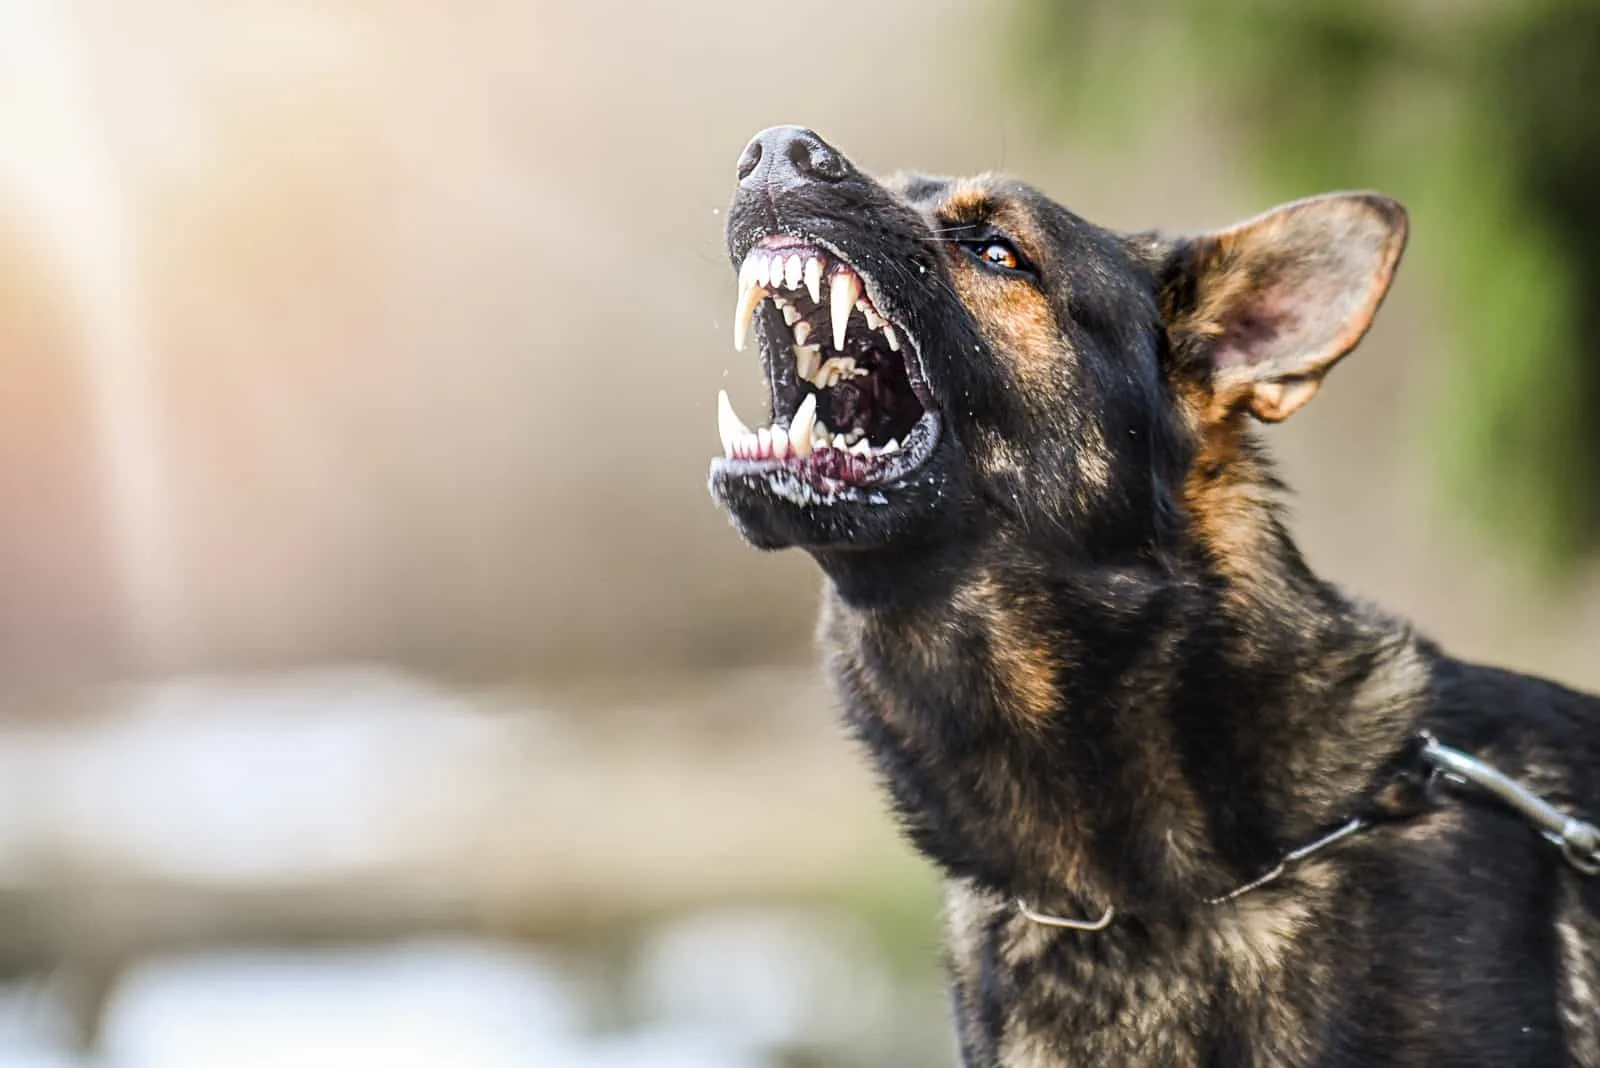 aggressive dog shows sharp teeth